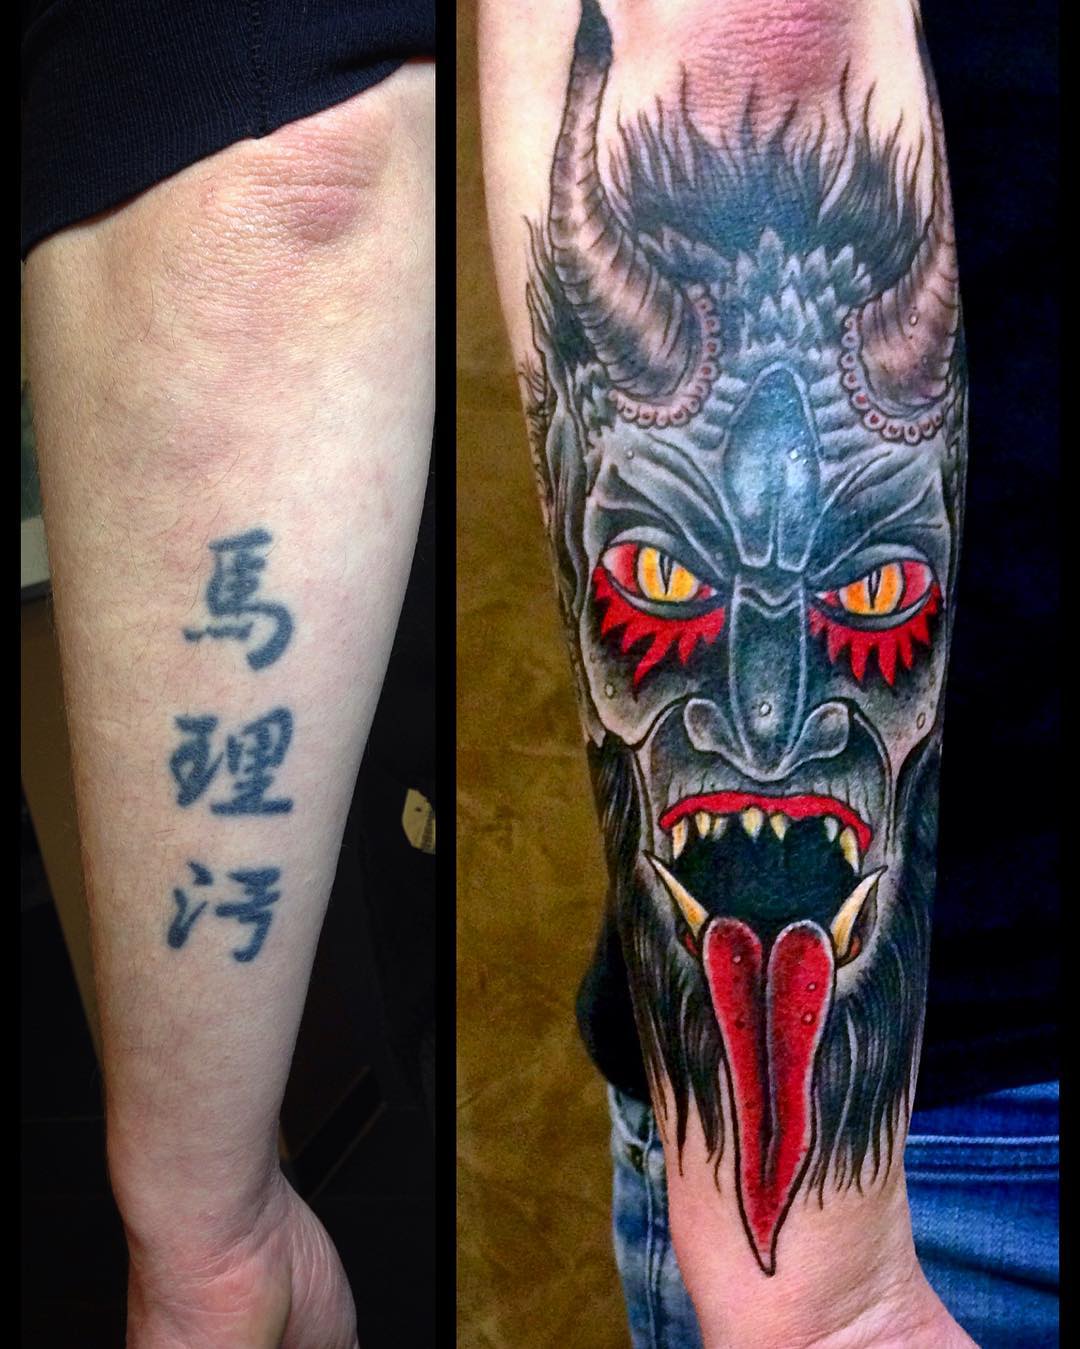 Bye bye Kanji symbols... #tattoo#tattooing#tatovering#tatouage#tatuagem#traditio...